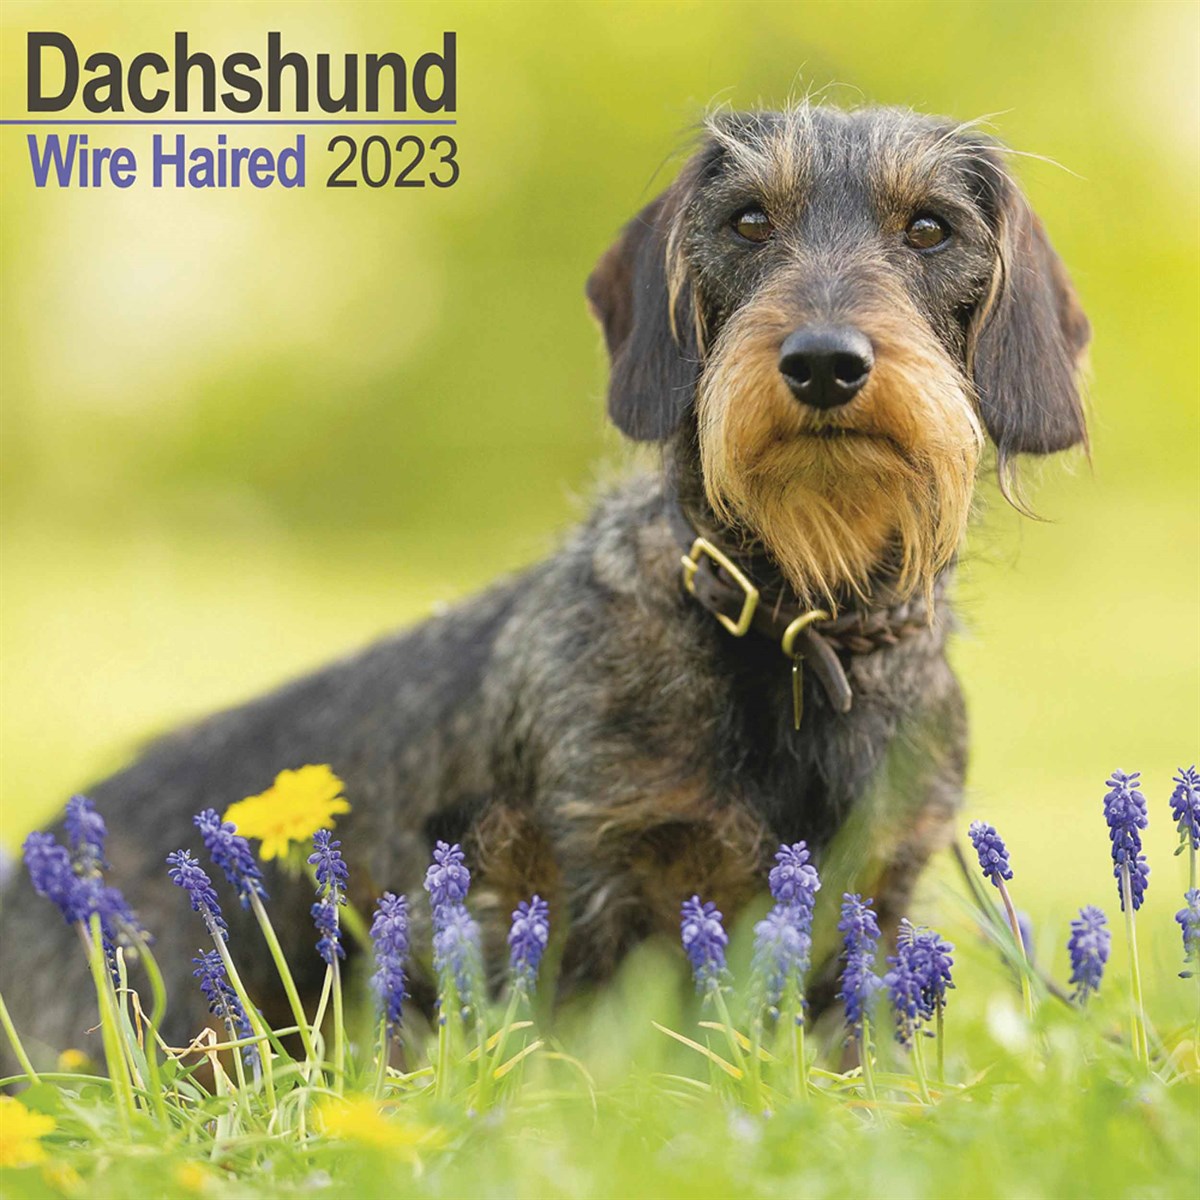 Wire Haired Dachshund 2023 Calendars